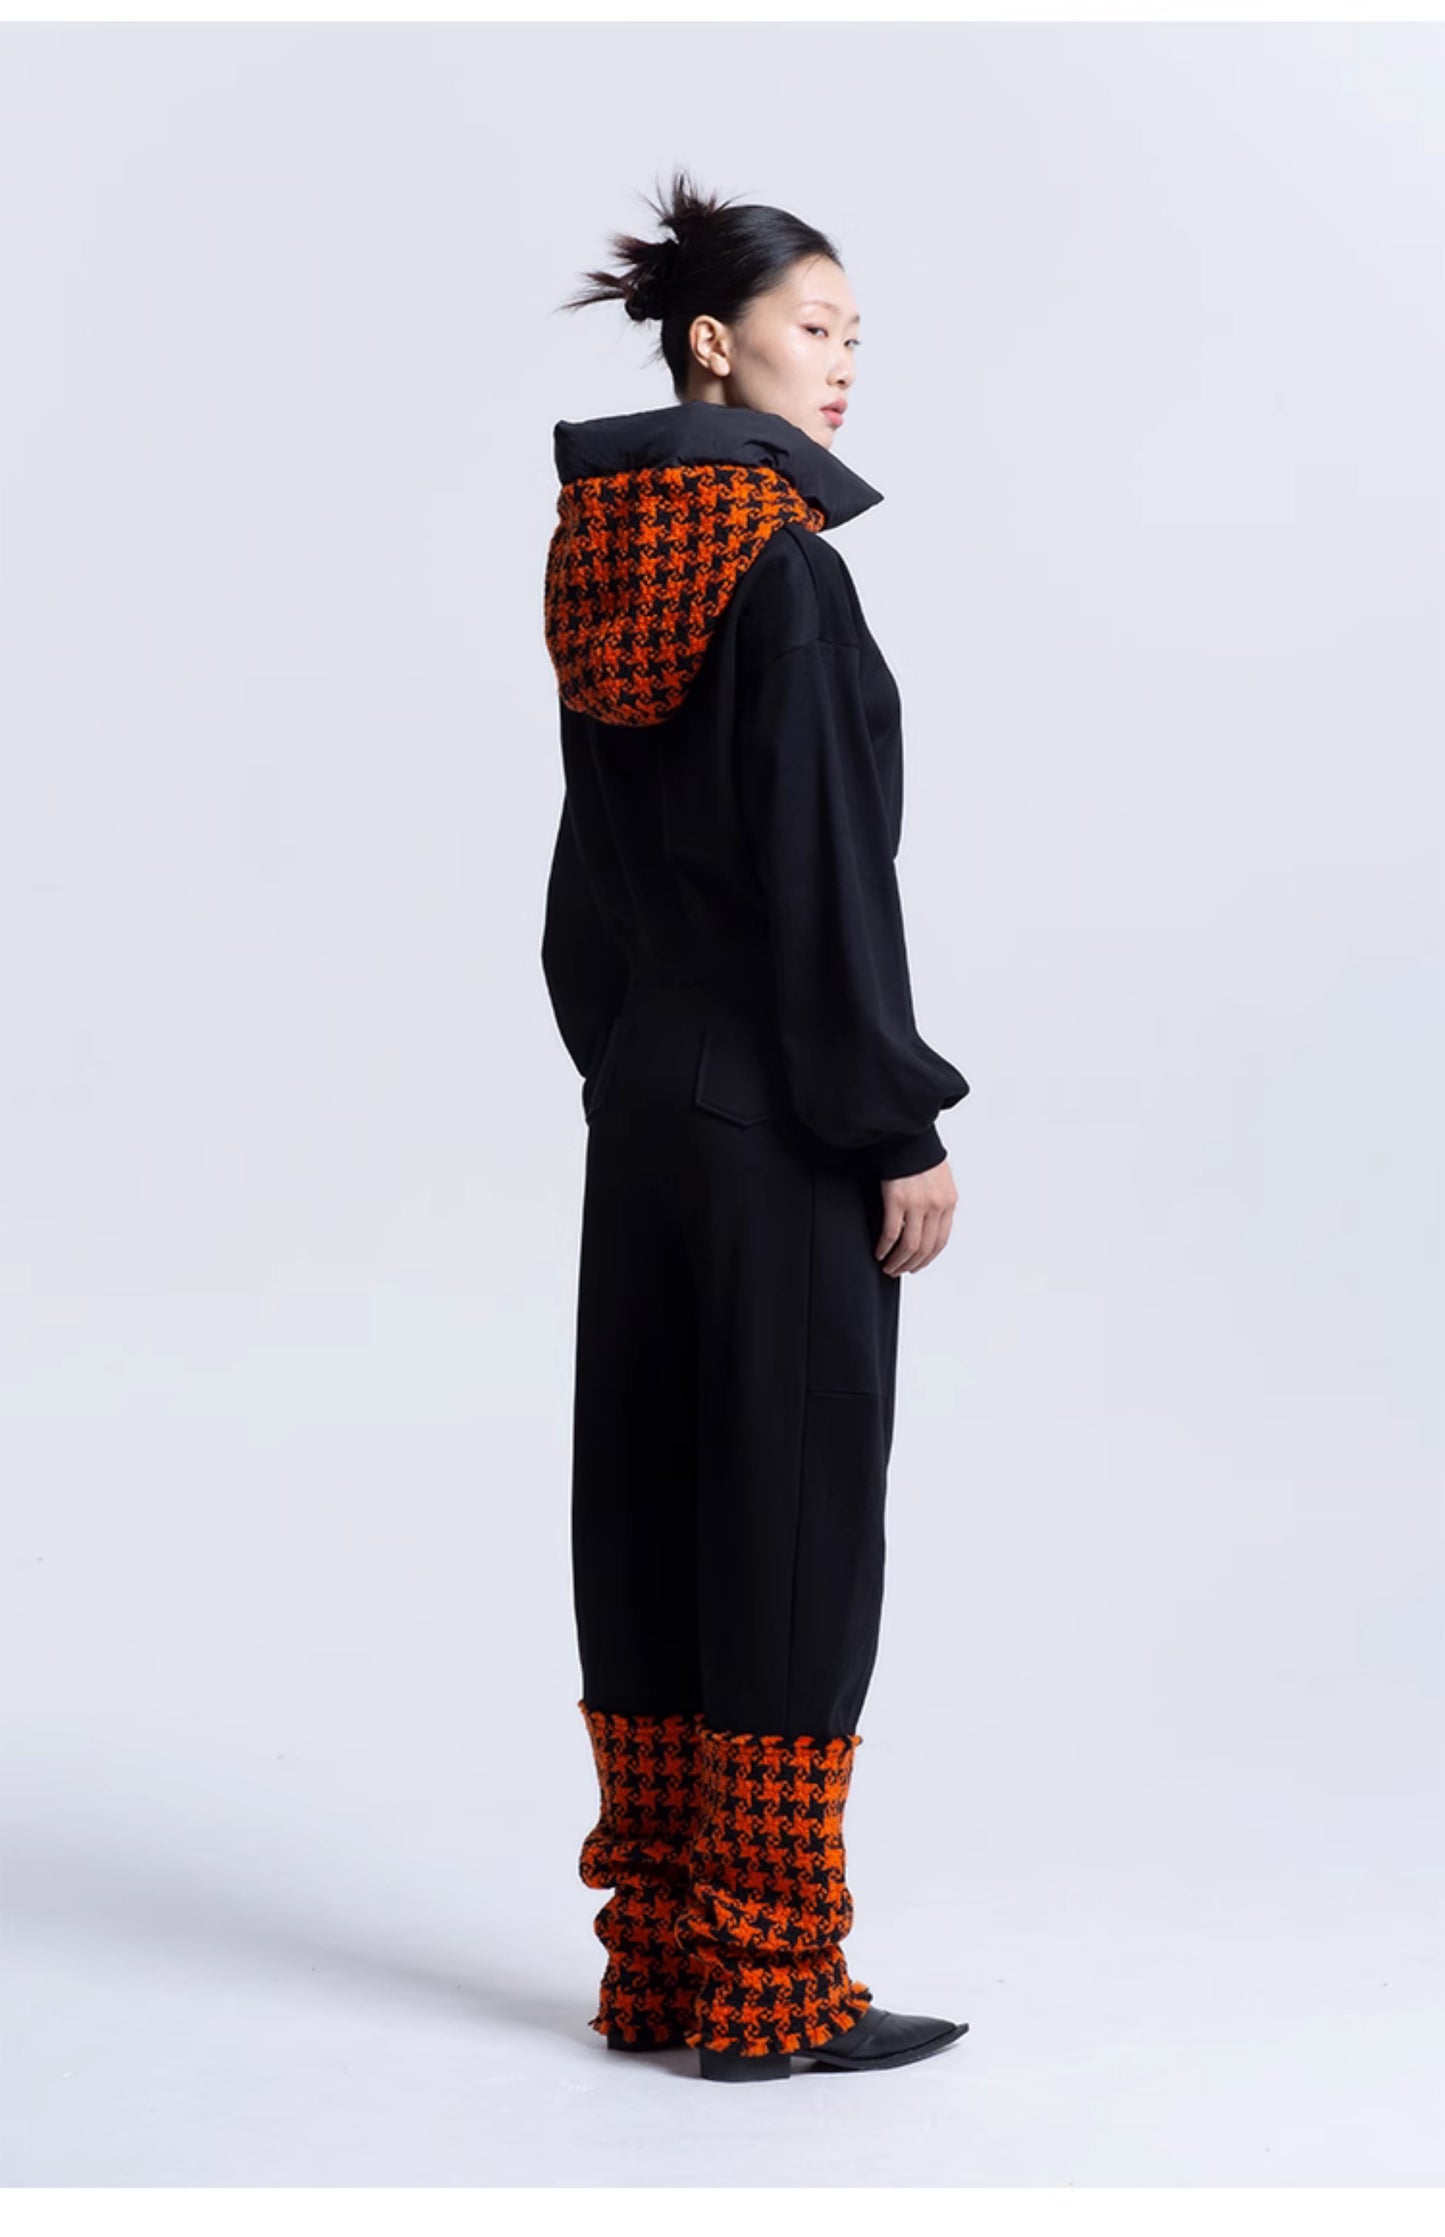 LEDIM W Patchwork luxury orange houndstooth plaid hooded black sweat shirt pullover -Haiei